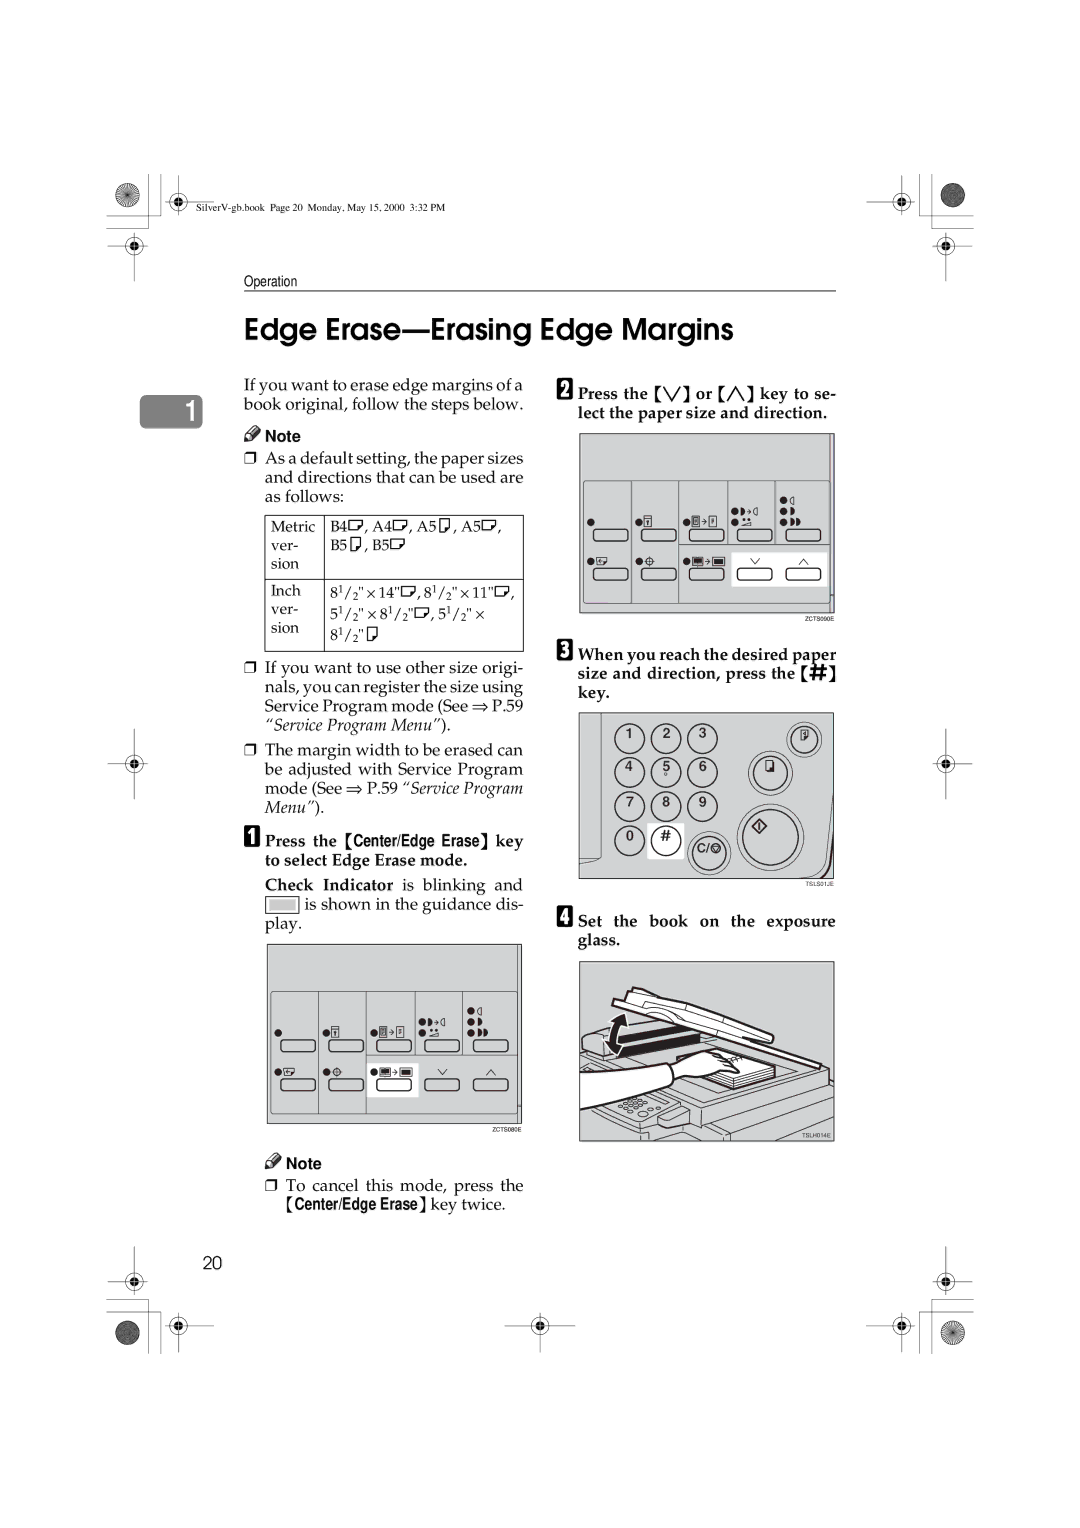 Ricoh Priport, JP1210/1250 manual Edge Erase-Erasing Edge Margins, Press the Center/Edge Erase key to select Edge Erase mode 